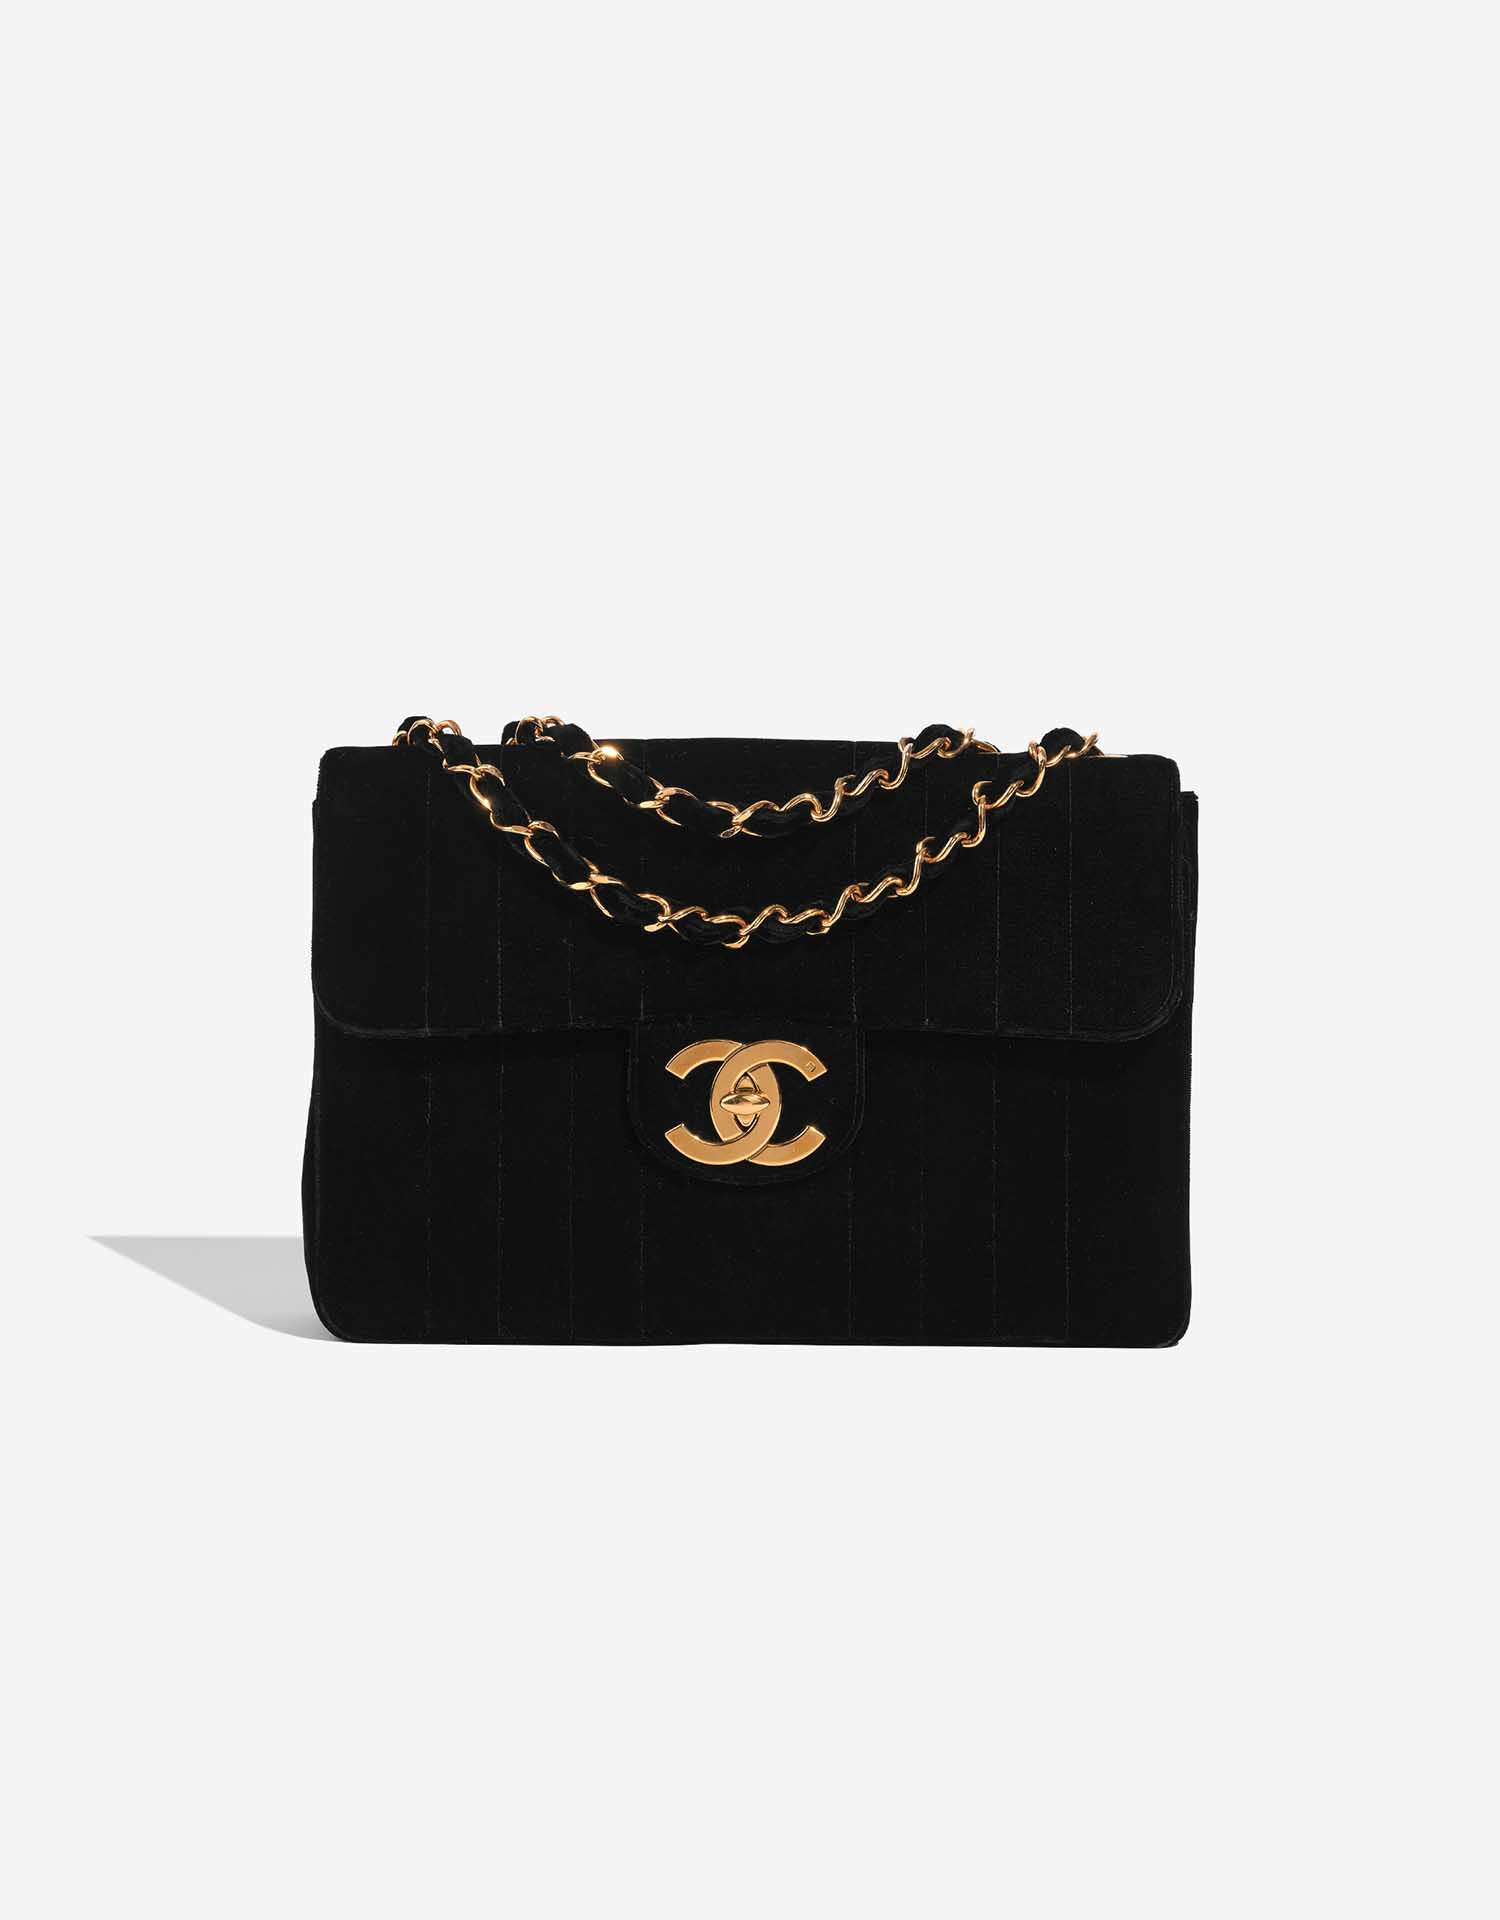 Chanel Vintage Classic Timeless Double Flap Lambskin 10 Shoulder Bag